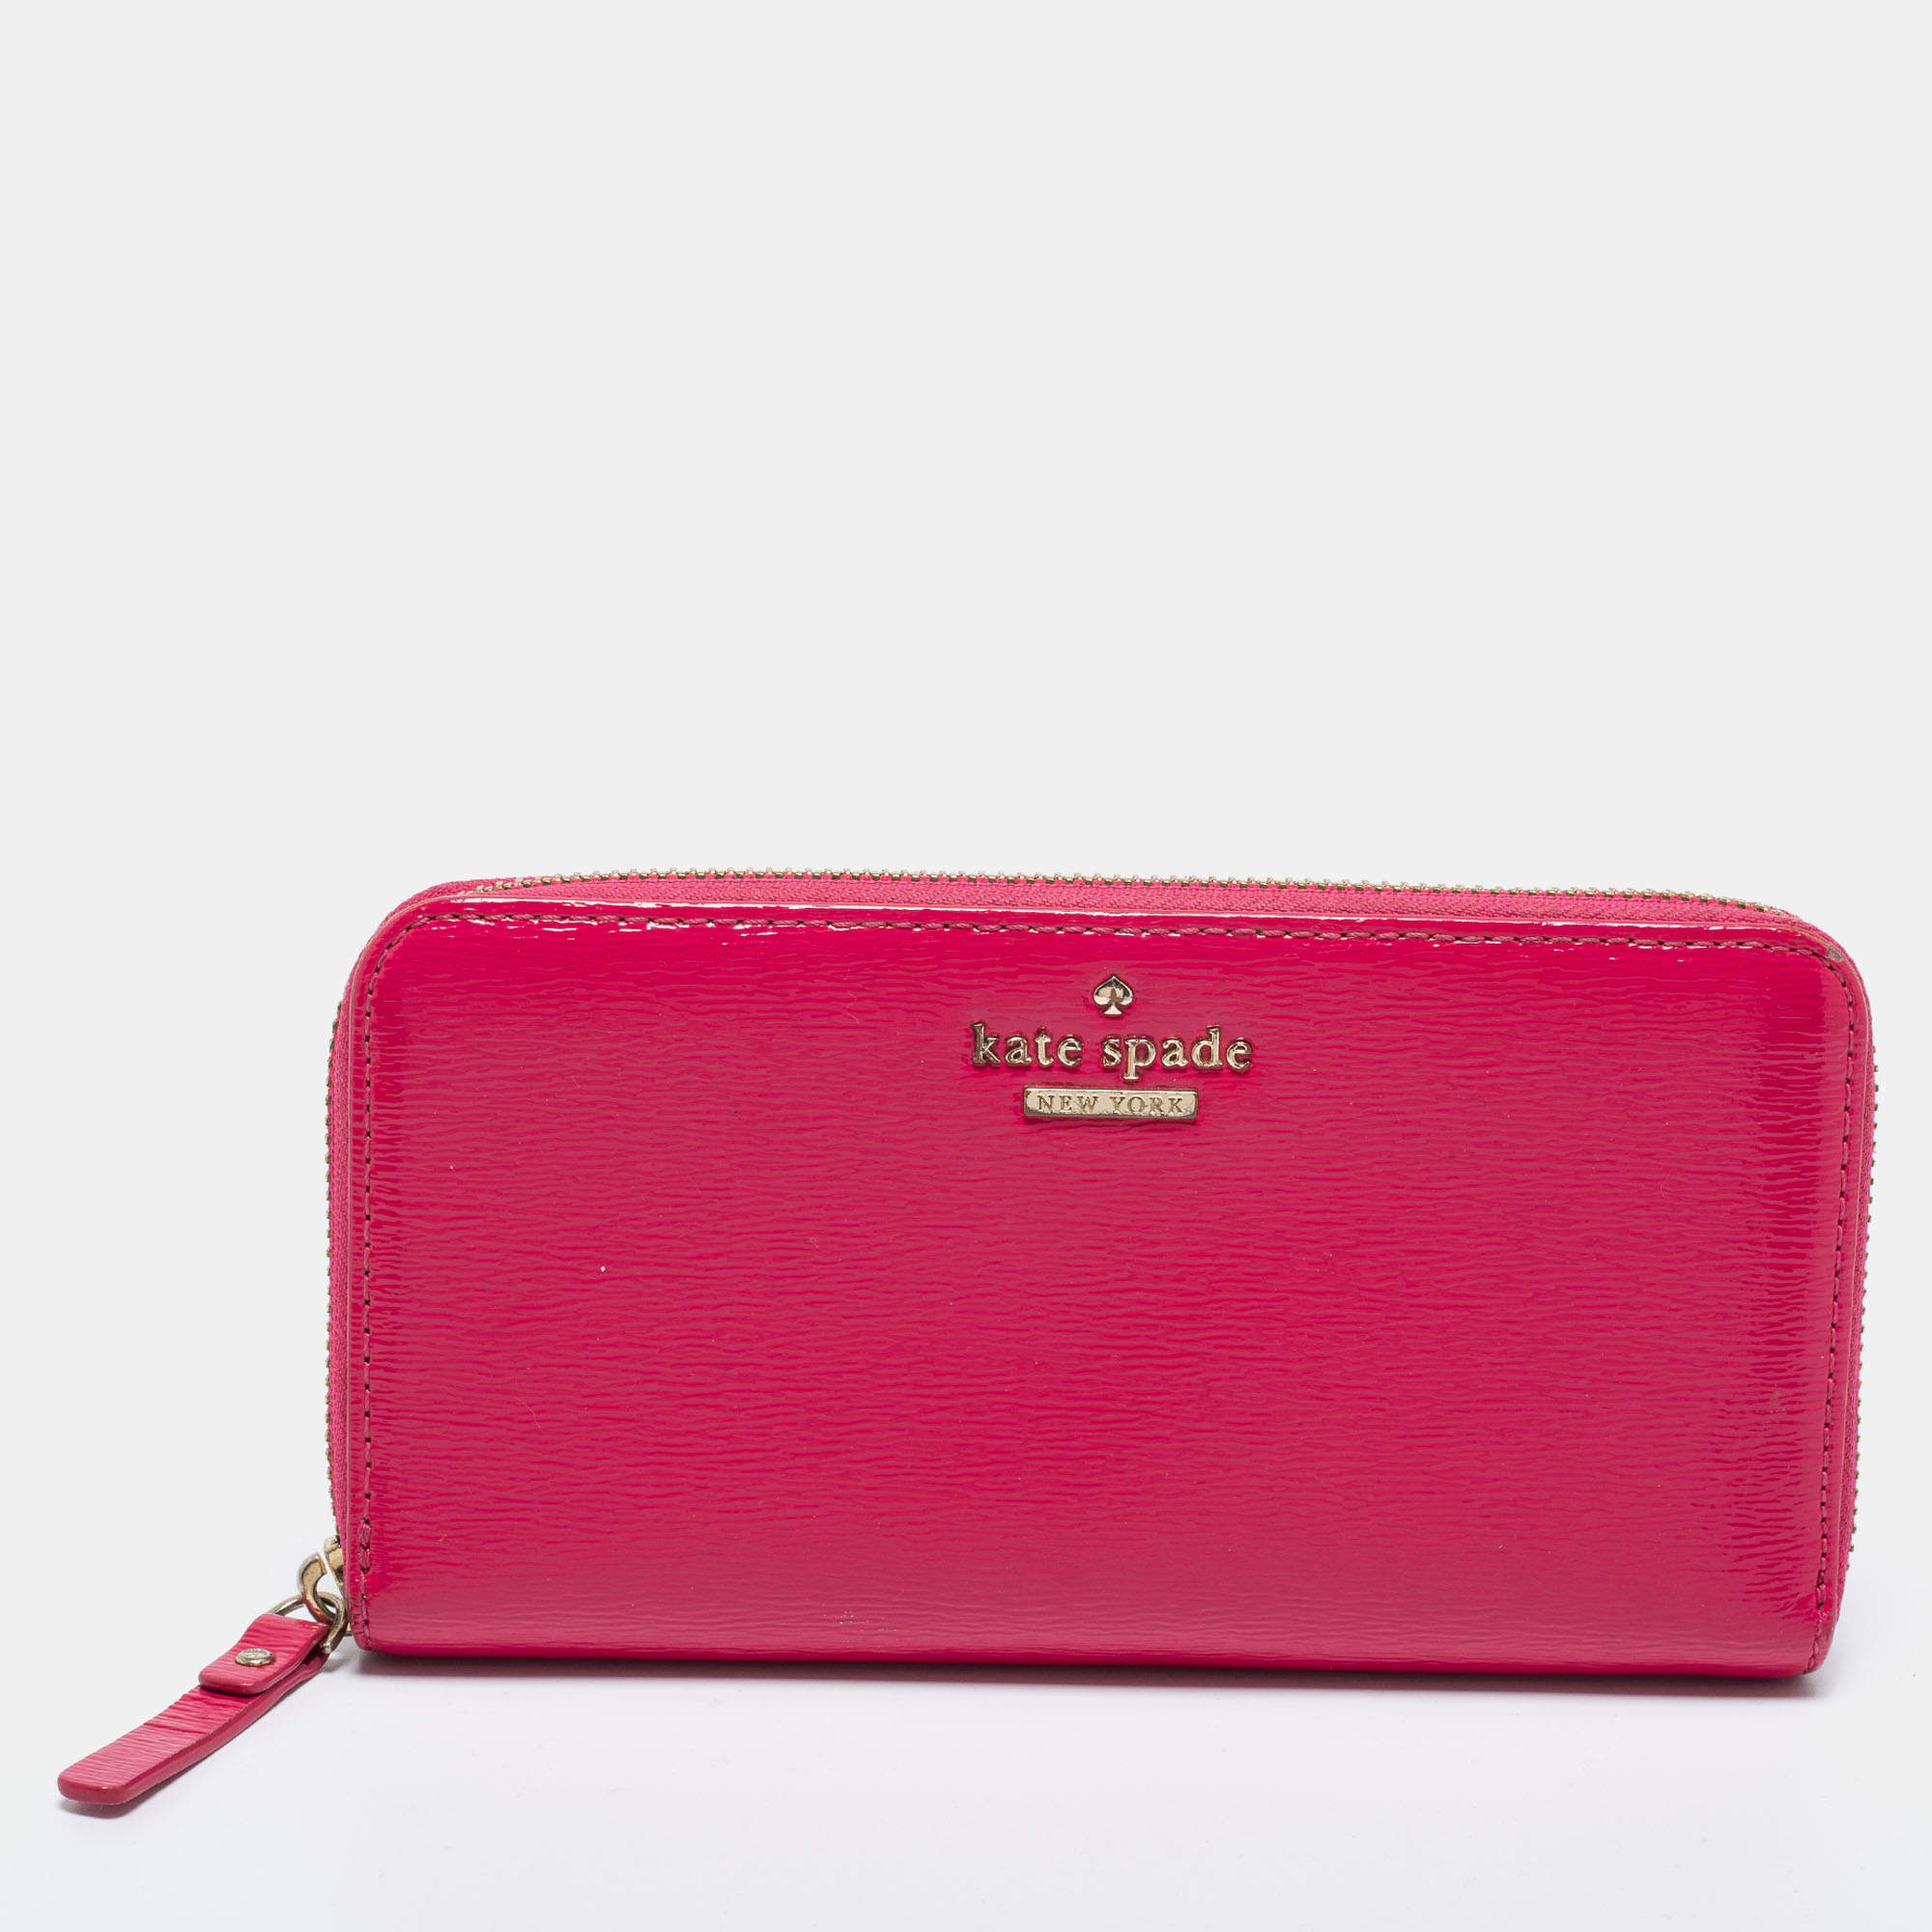 Kate Spade Pink Patent Leather Zip Around Wallet Kate Spade | TLC